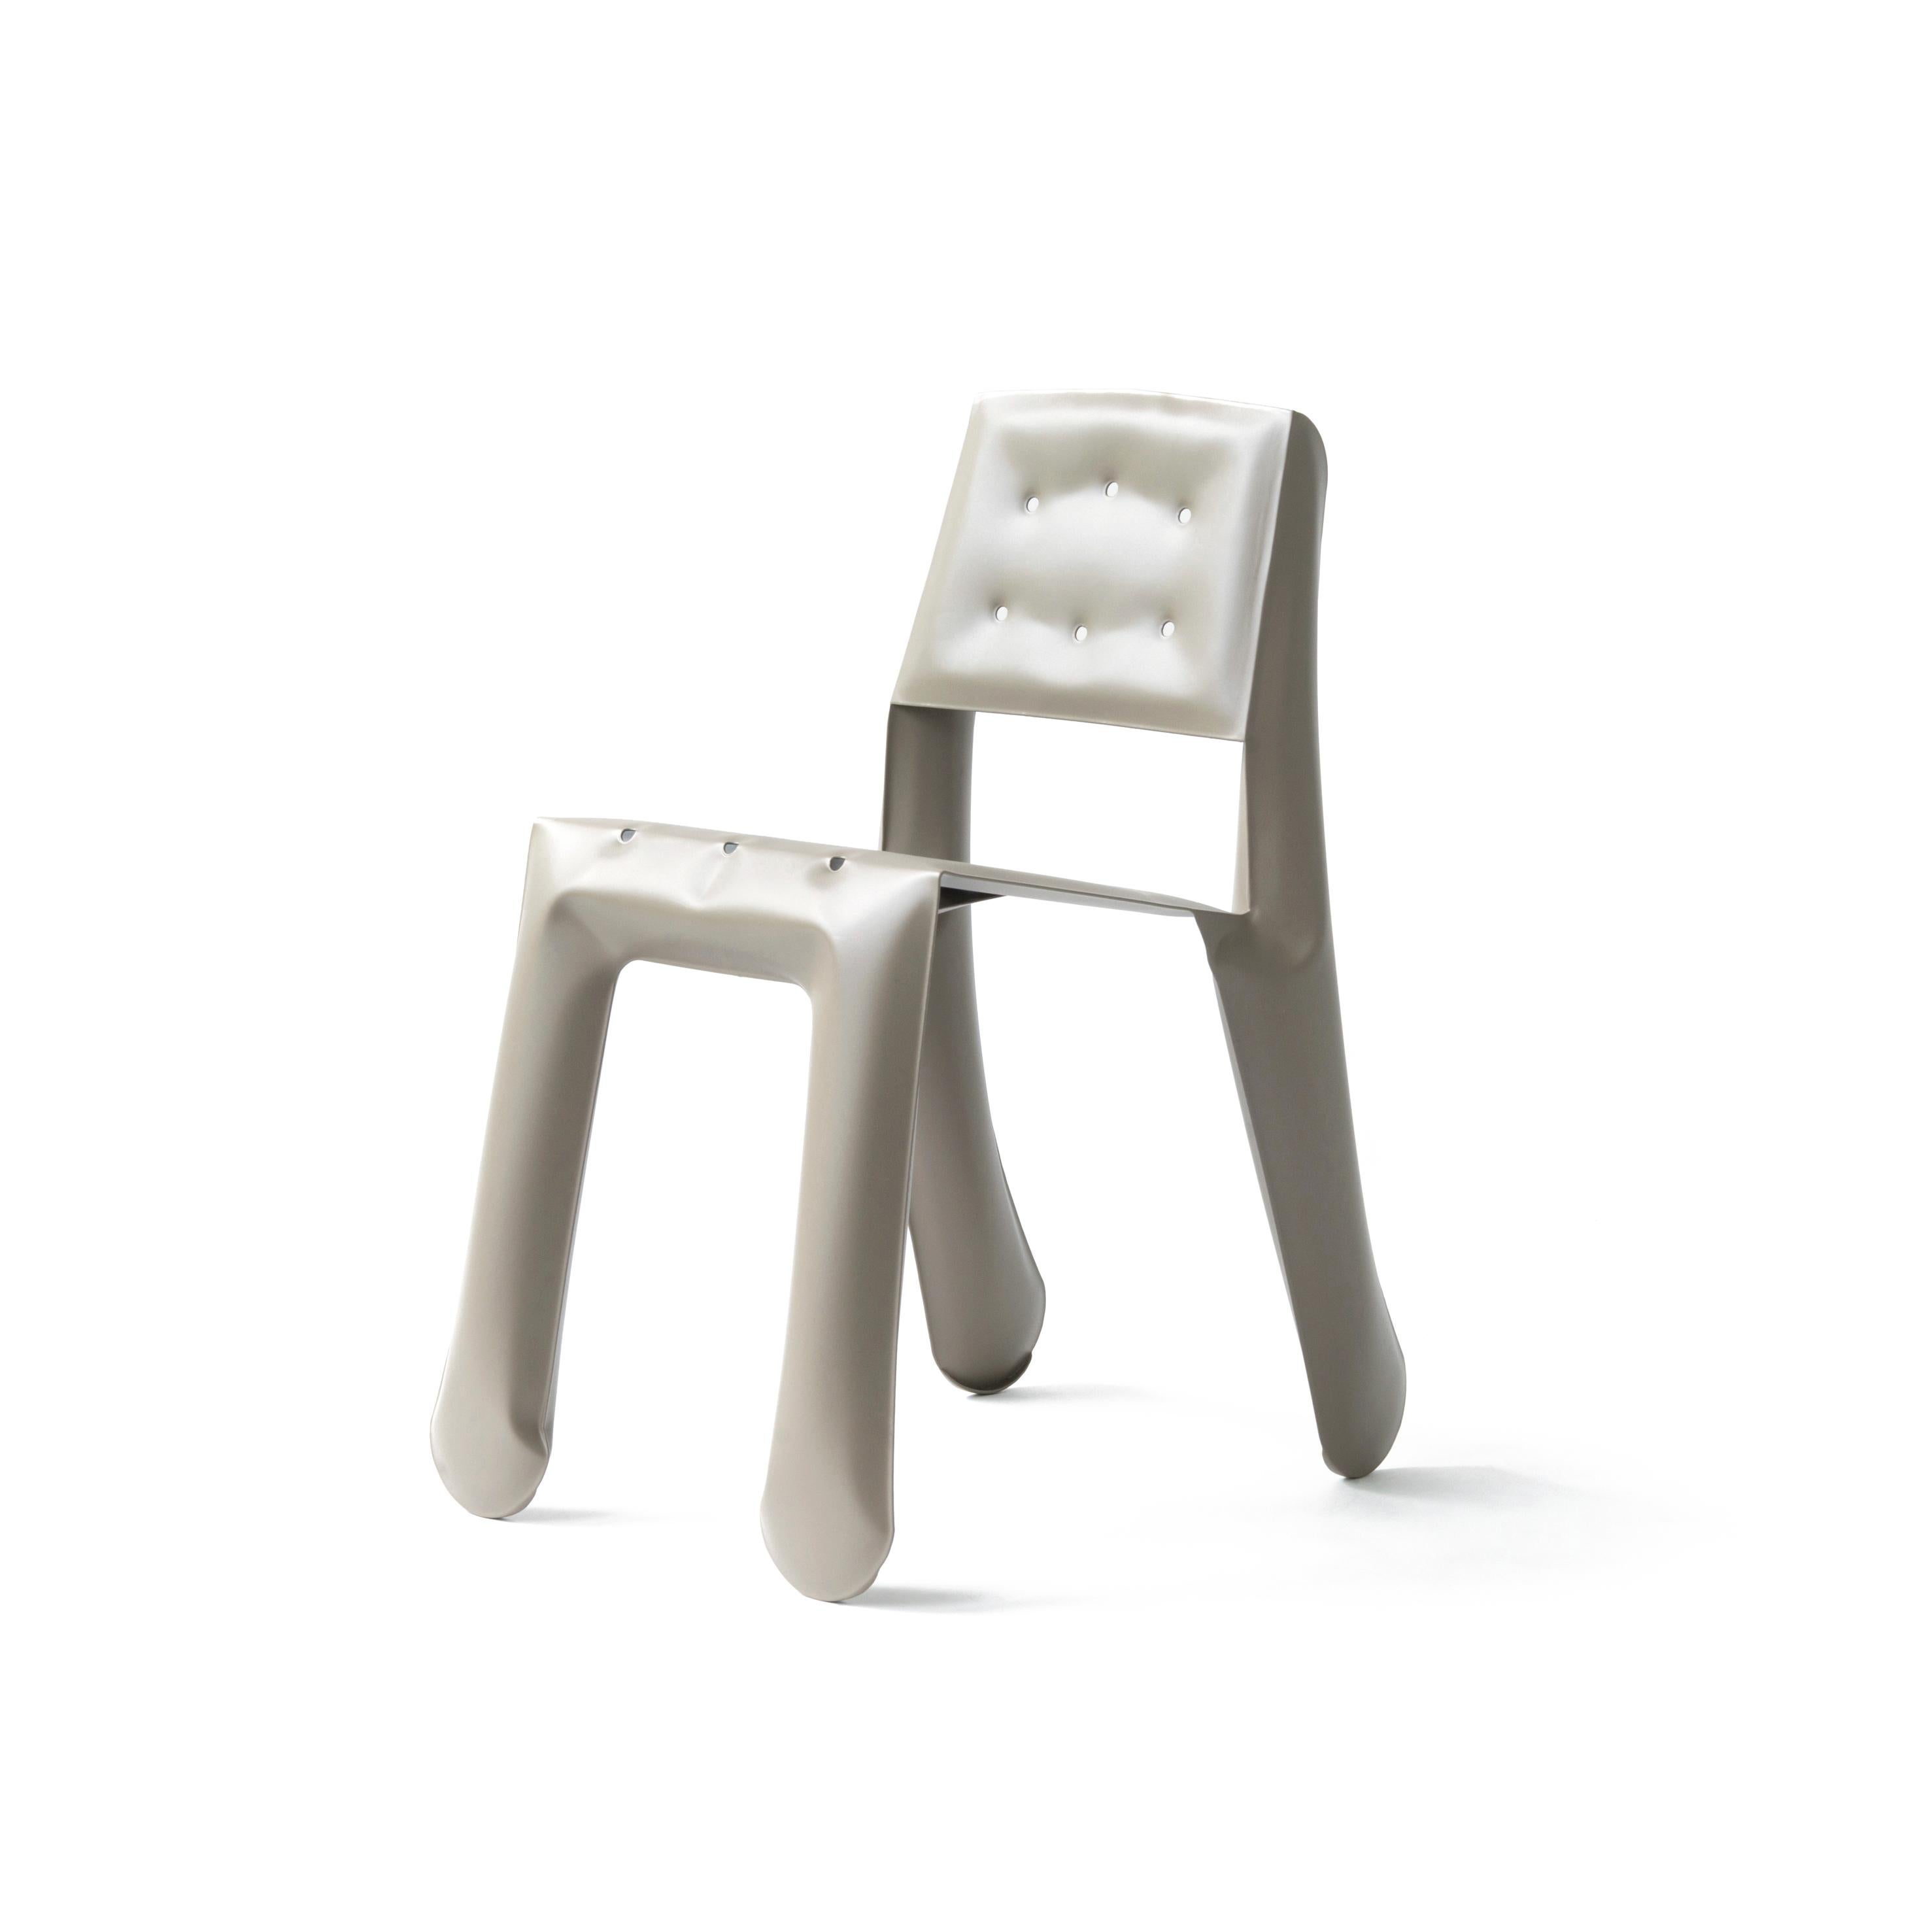 Beige Aluminum Chippensteel 0.5 Sculptural Chair by Zieta
Dimensions: D 58 x W 46 x H 80 cm 
Material: Aluminum. 
Finish: Powder-coated. Matt finish. 
Available in colors: white matt, beige, black, blue-gray, graphite, moss-gray, and, umbra-grey.